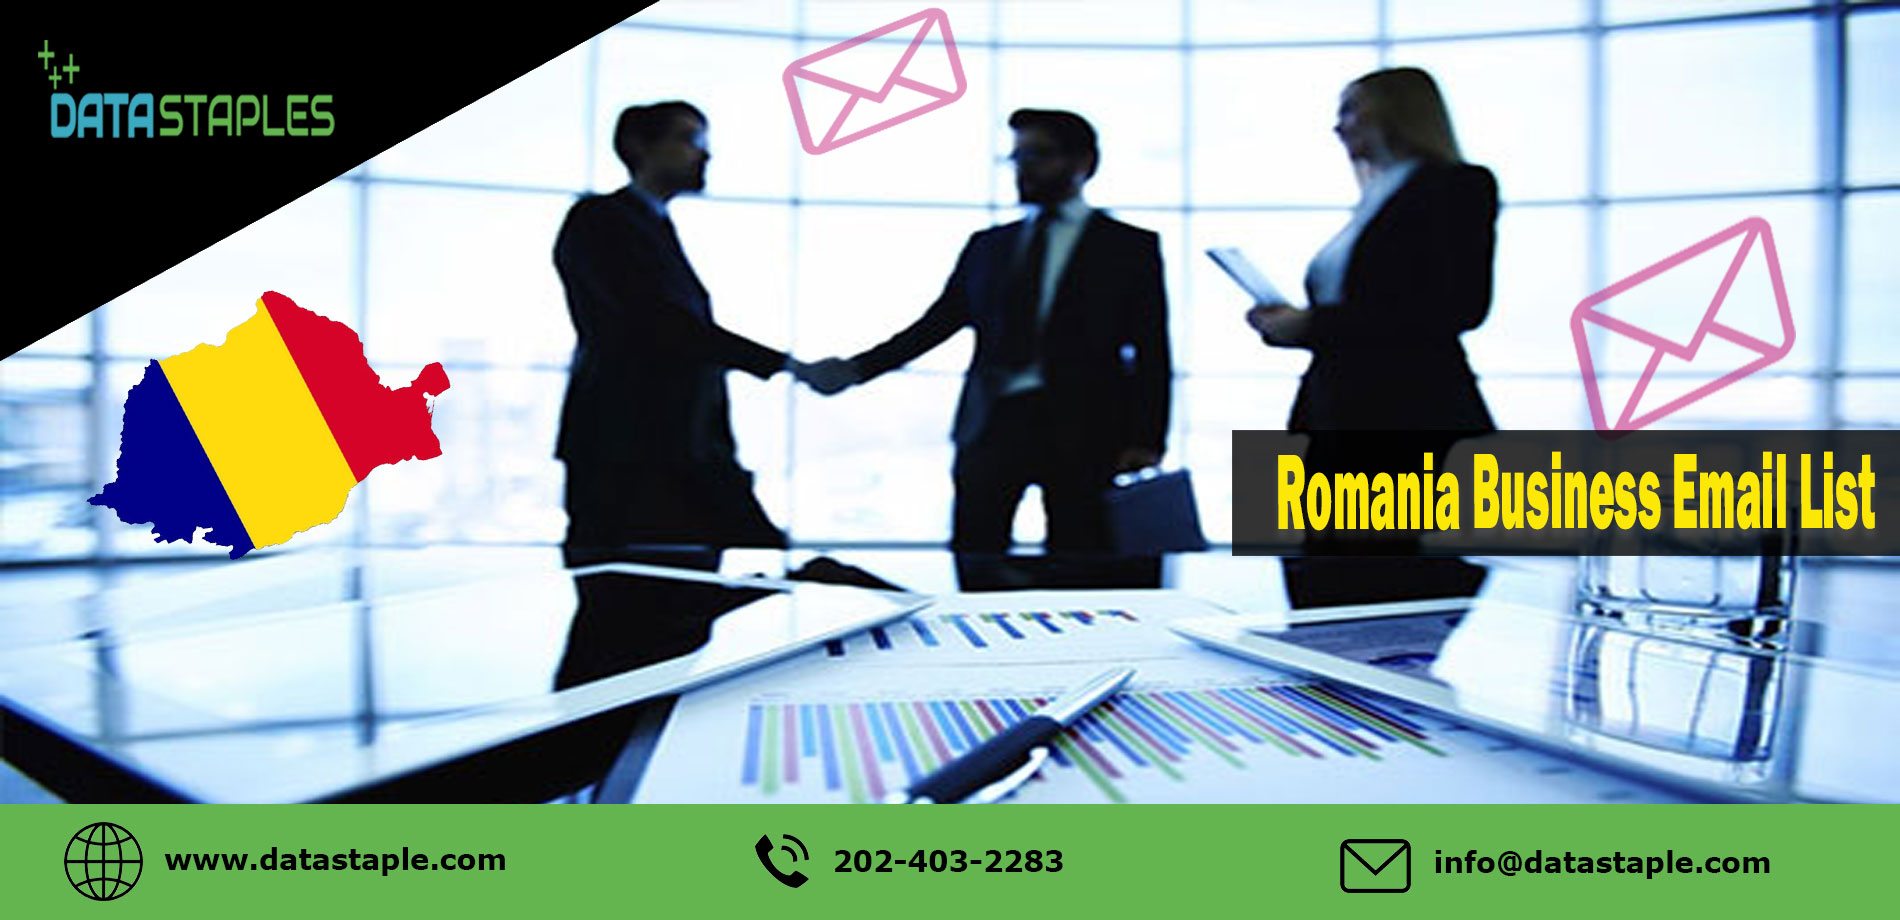 Romania Business Email List | DataStaples